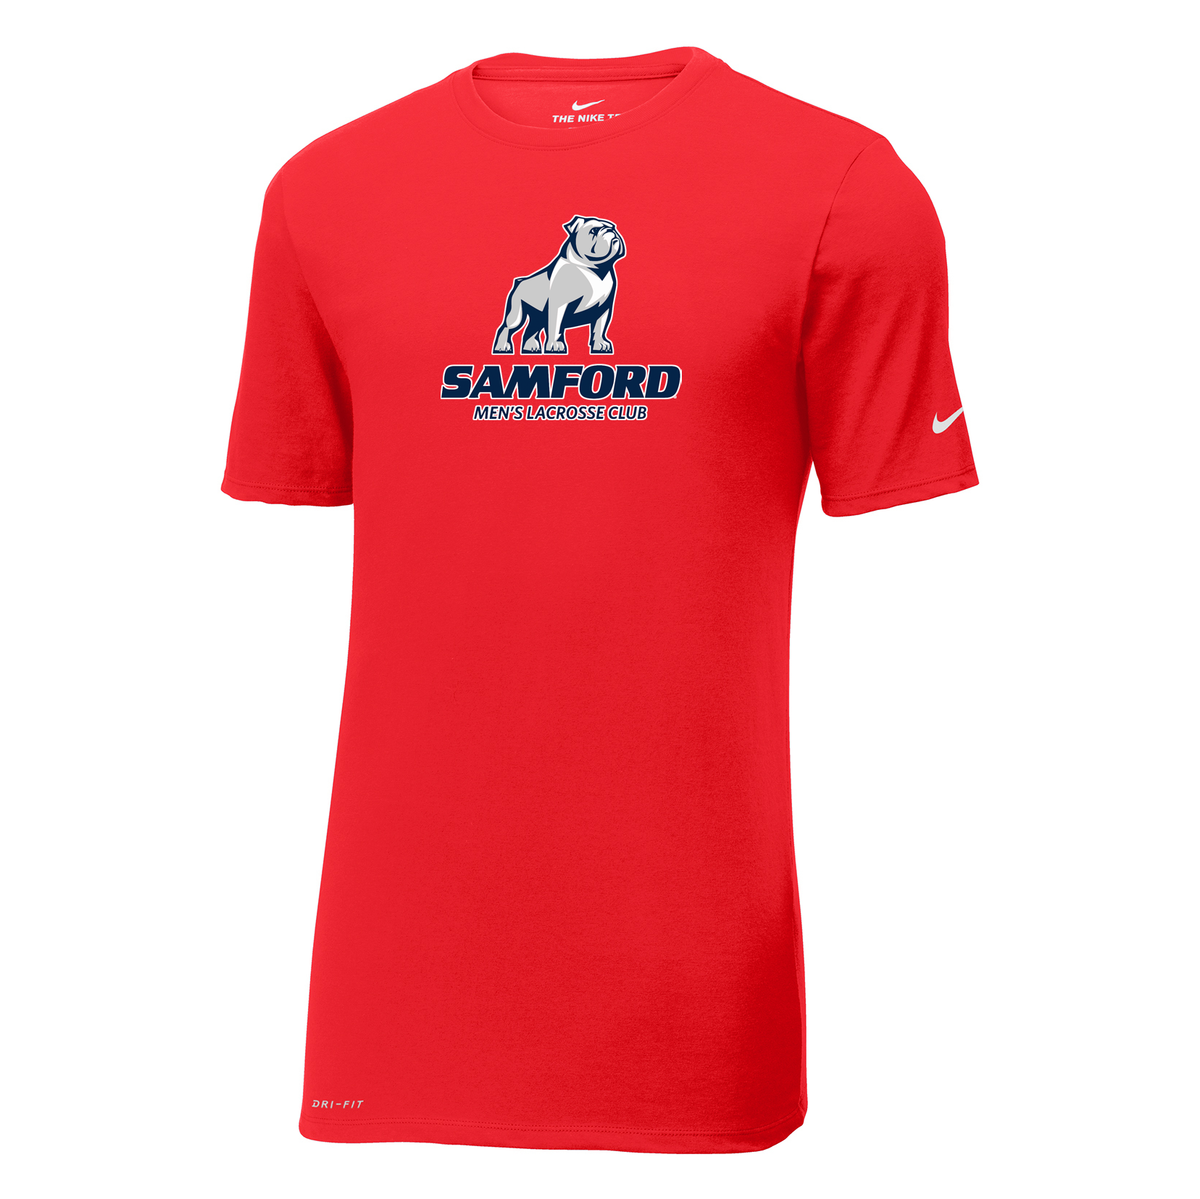 Samford University Lacrosse Club Nike Dri-FIT Tee